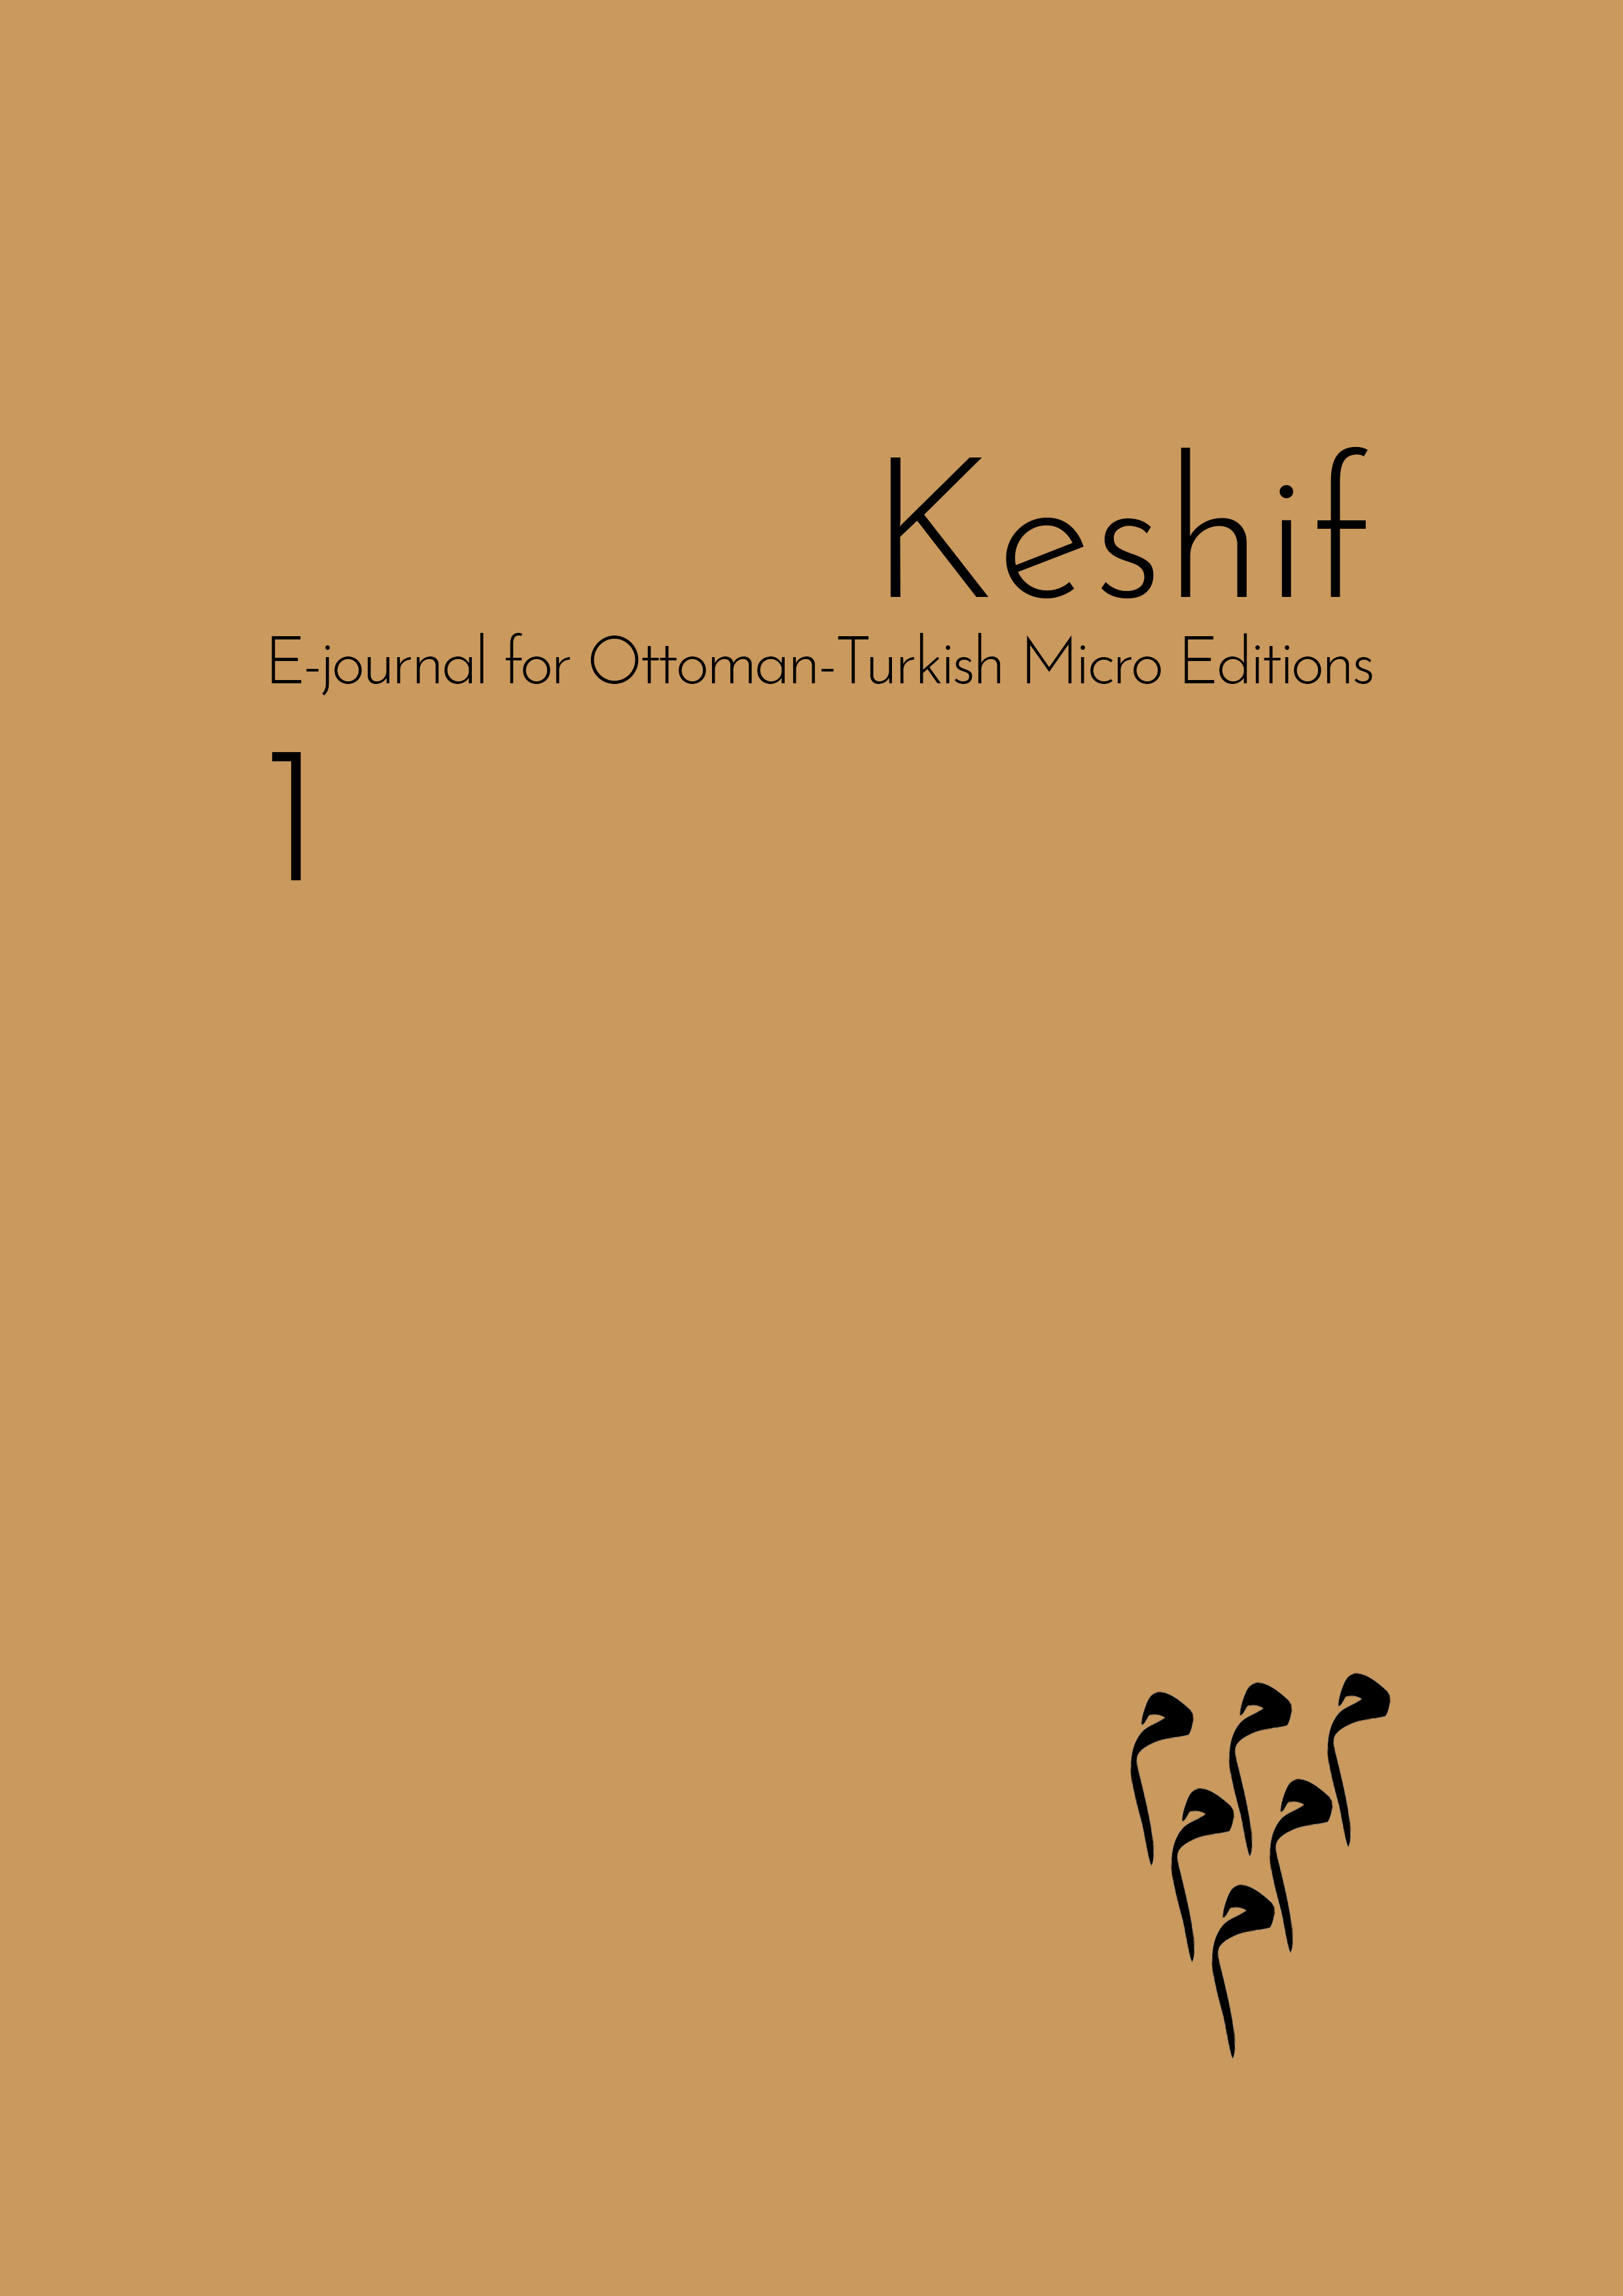 					View 2023: Keshif: E-Journal for Ottoman-Turkish Micro Editions
				